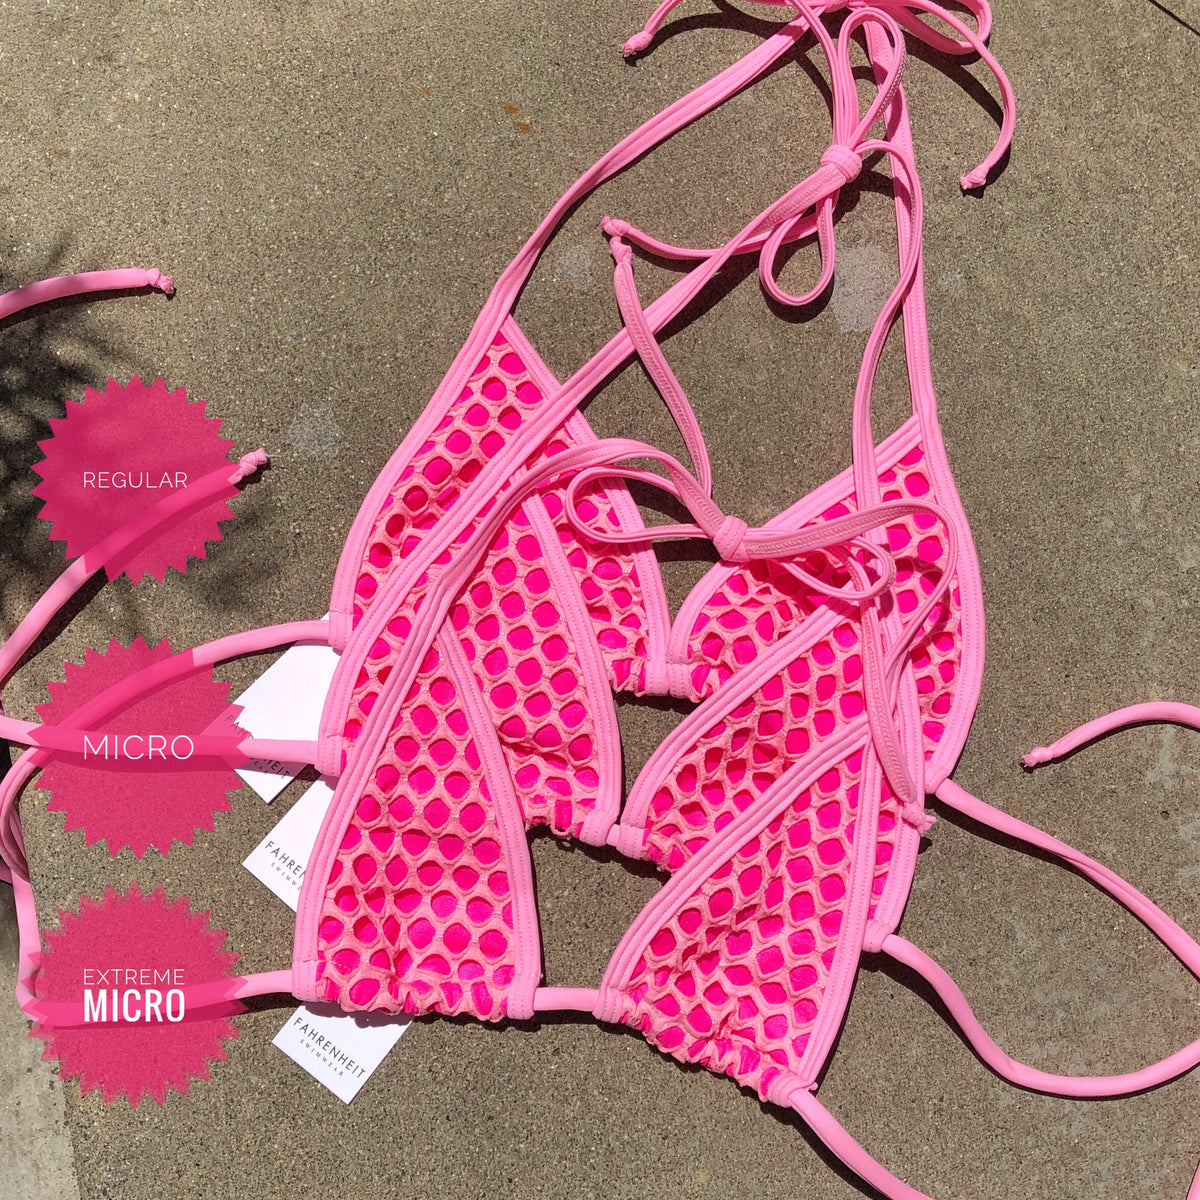 Extreme micro bikini bottom Hot pink color Crochet Kuwait